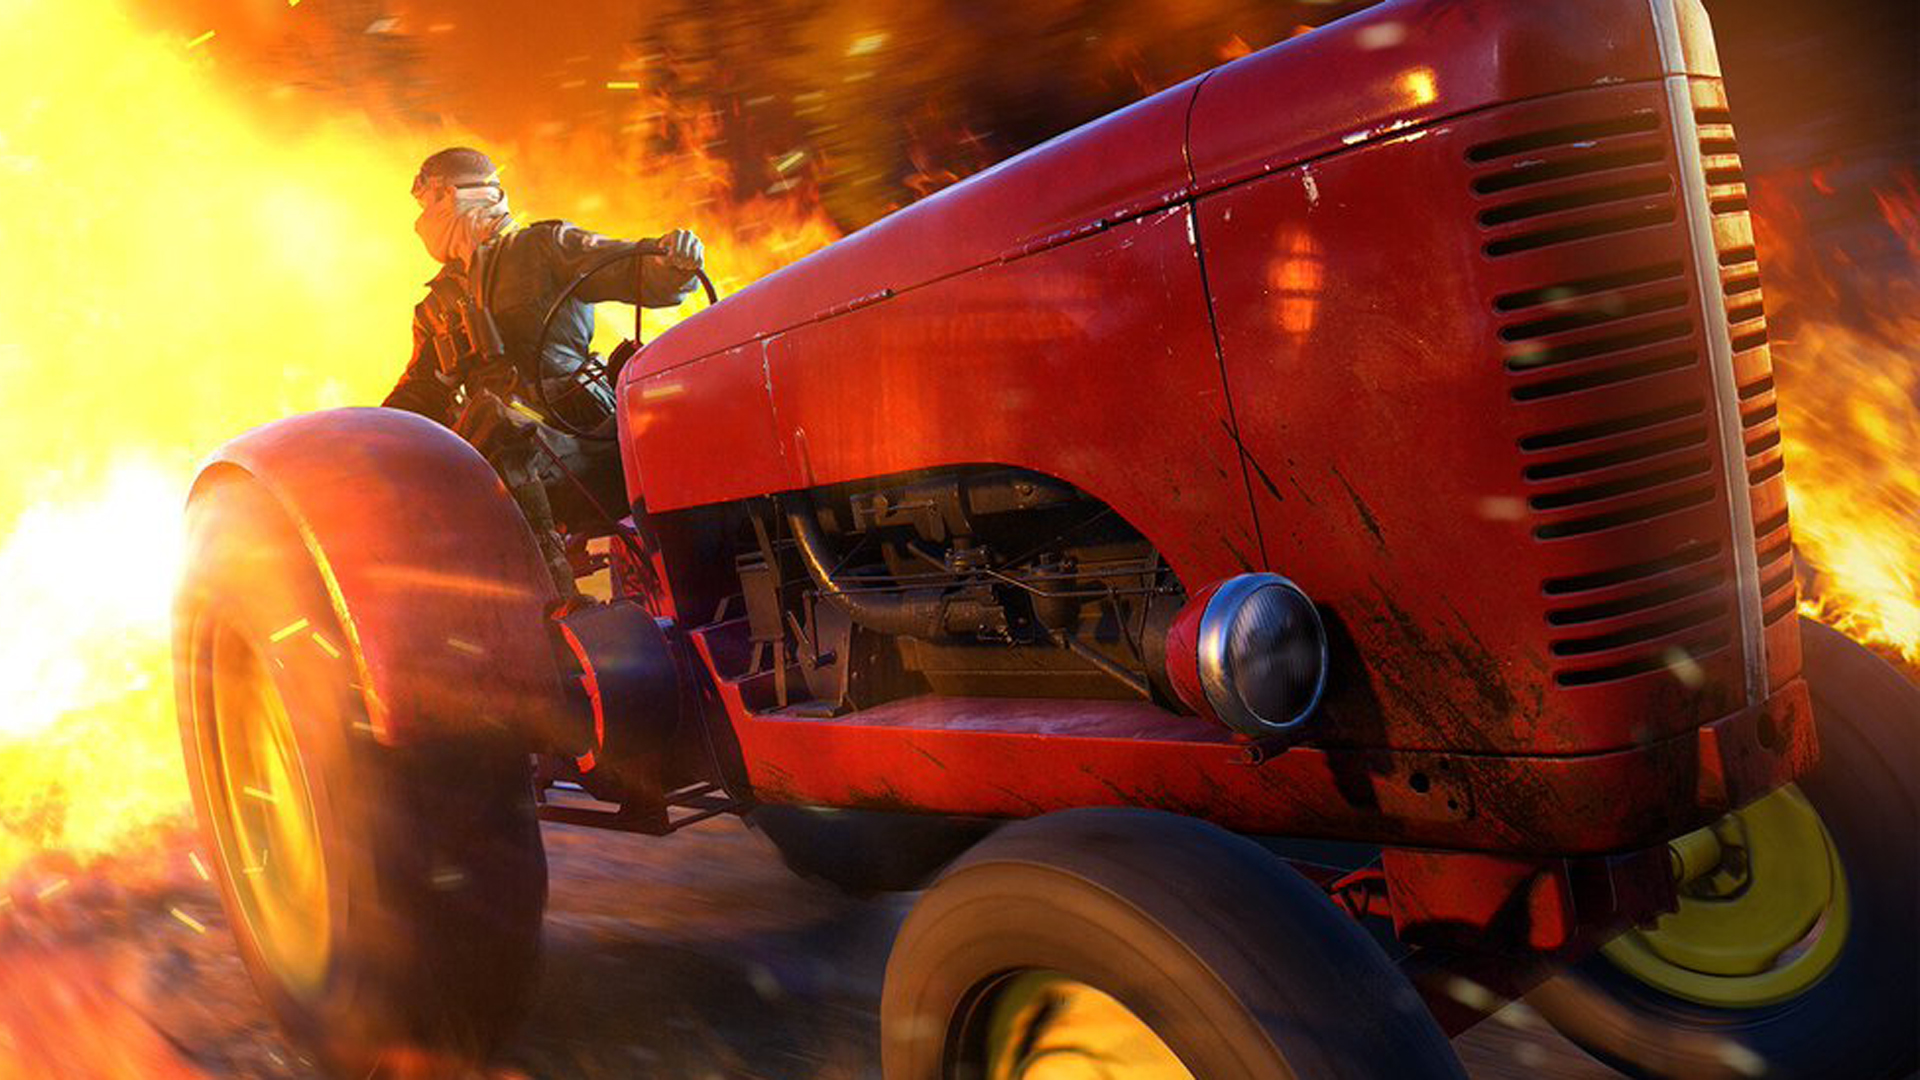 Farming Simulator 22 has more players on Steam than Battlefield 2042